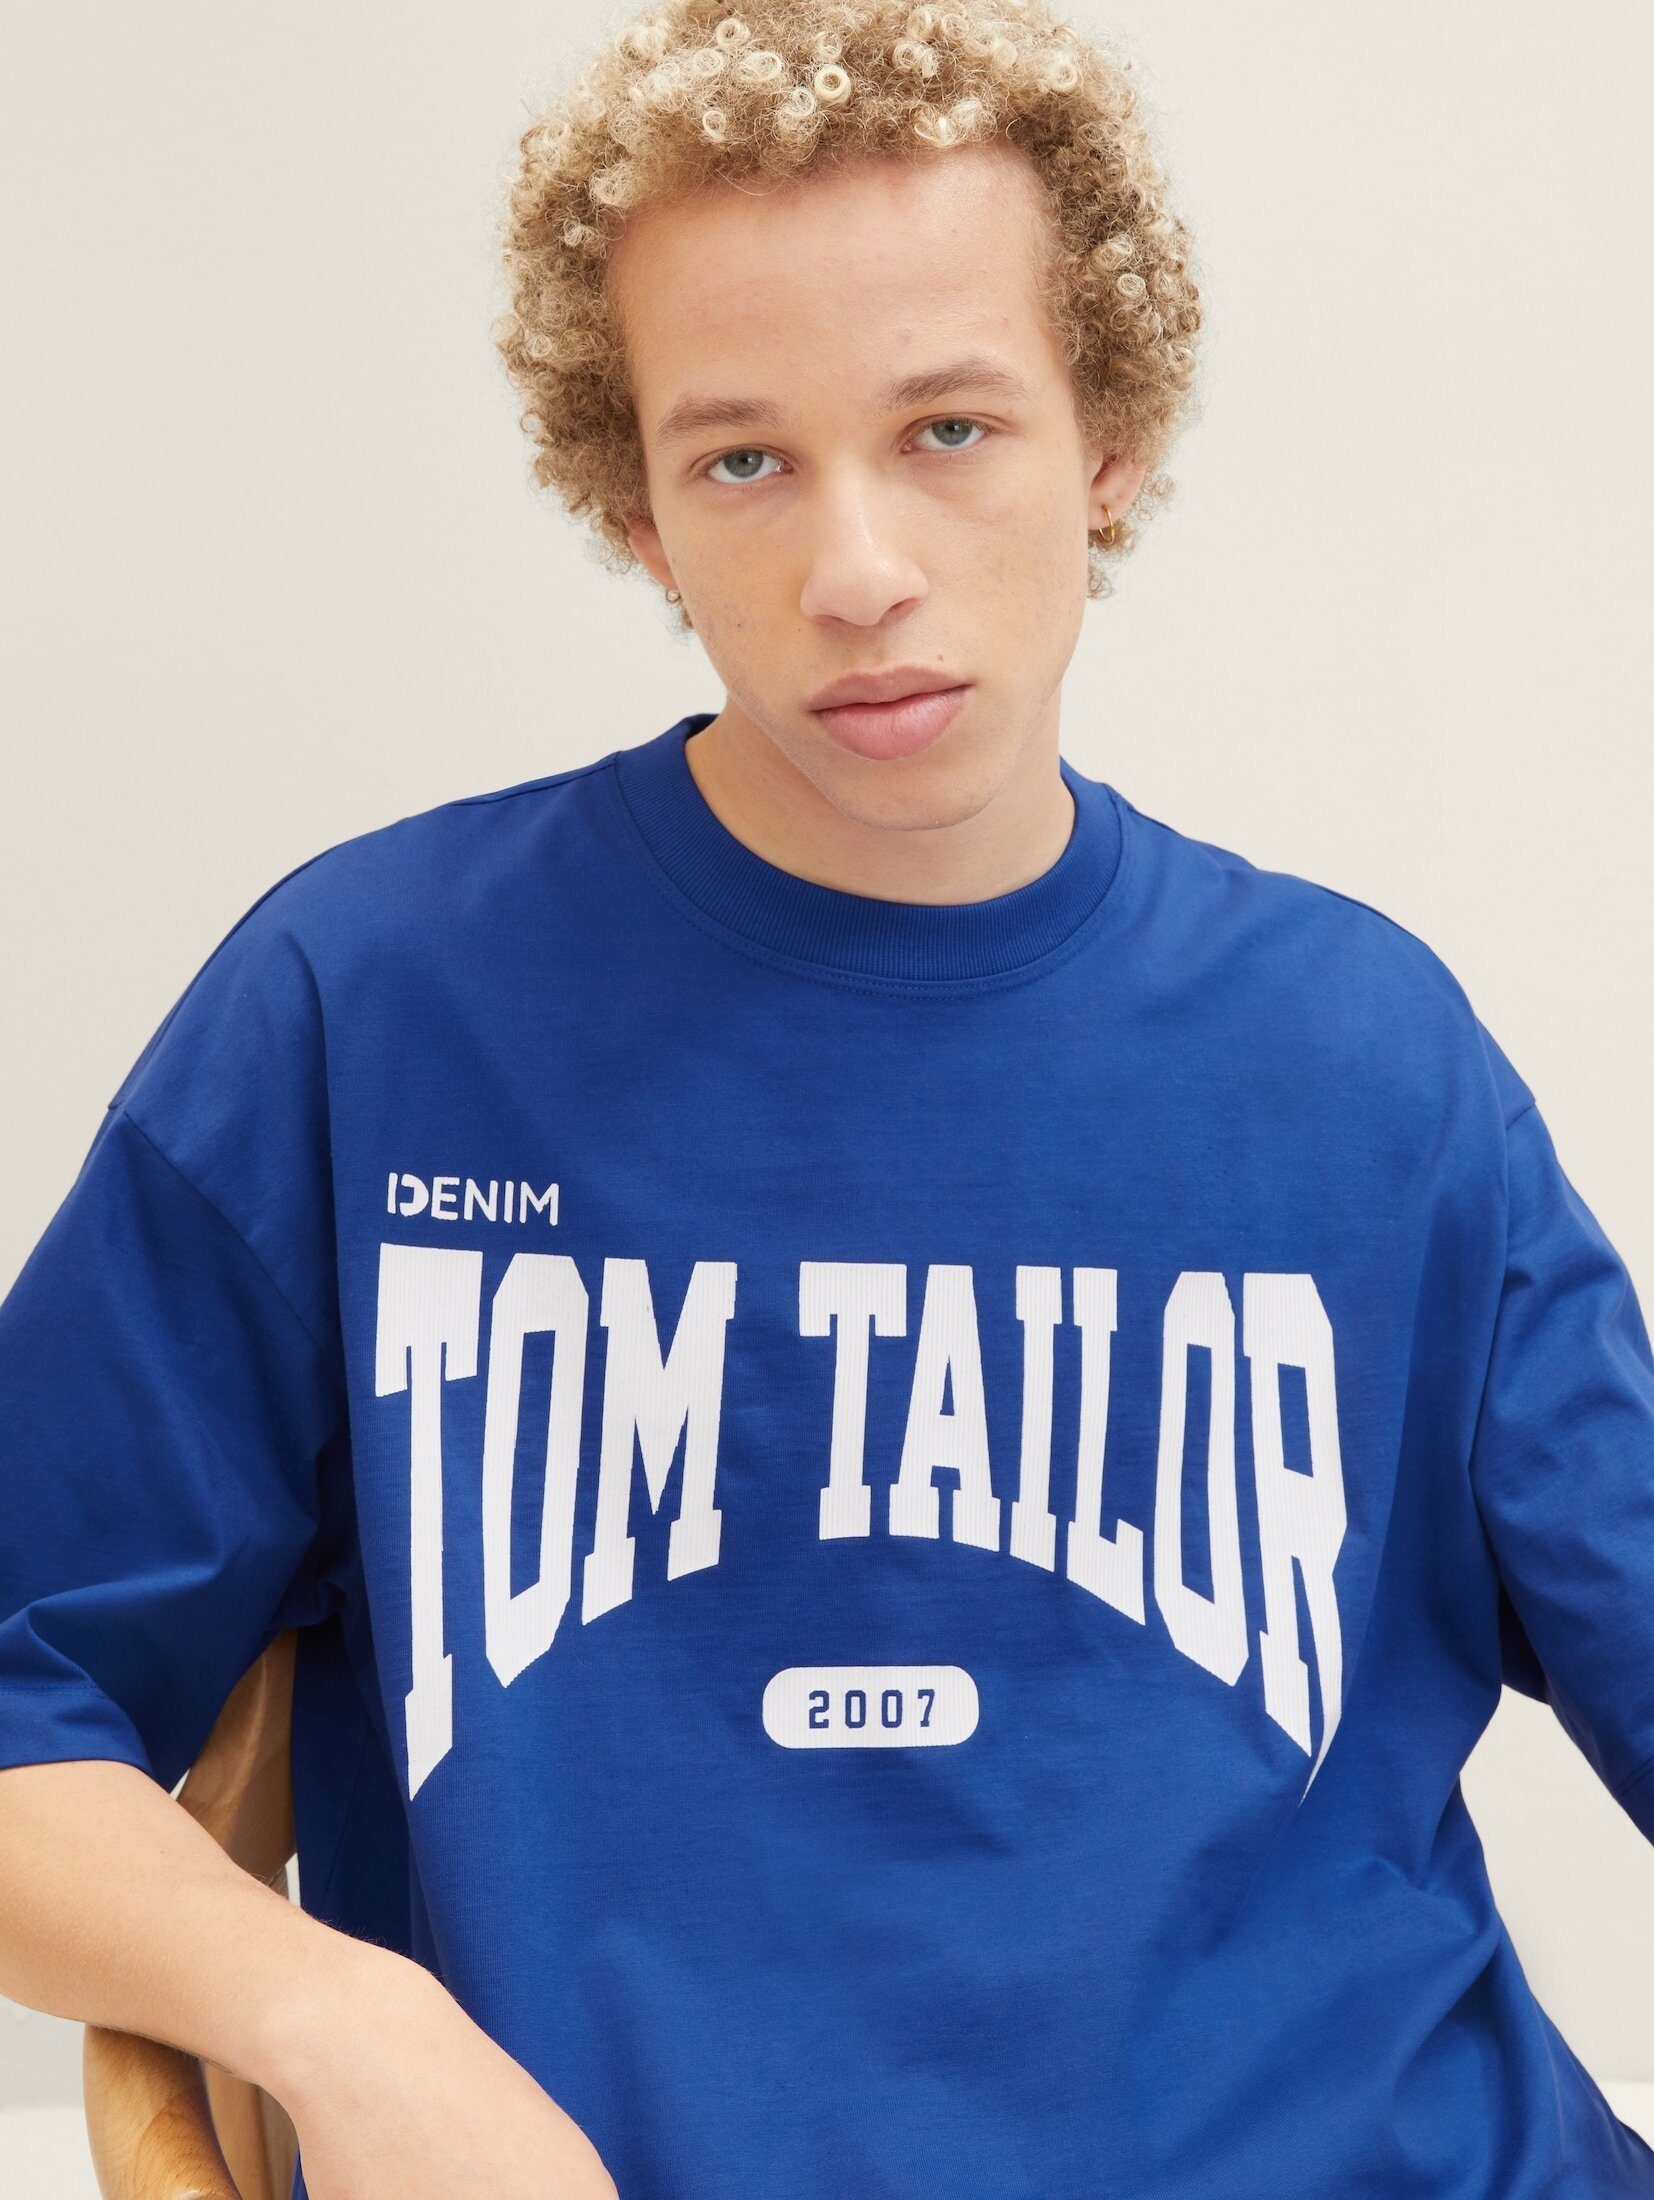 T-Shirt TAILOR royal Denim T-Shirt shiny Print Oversized mit blue TOM